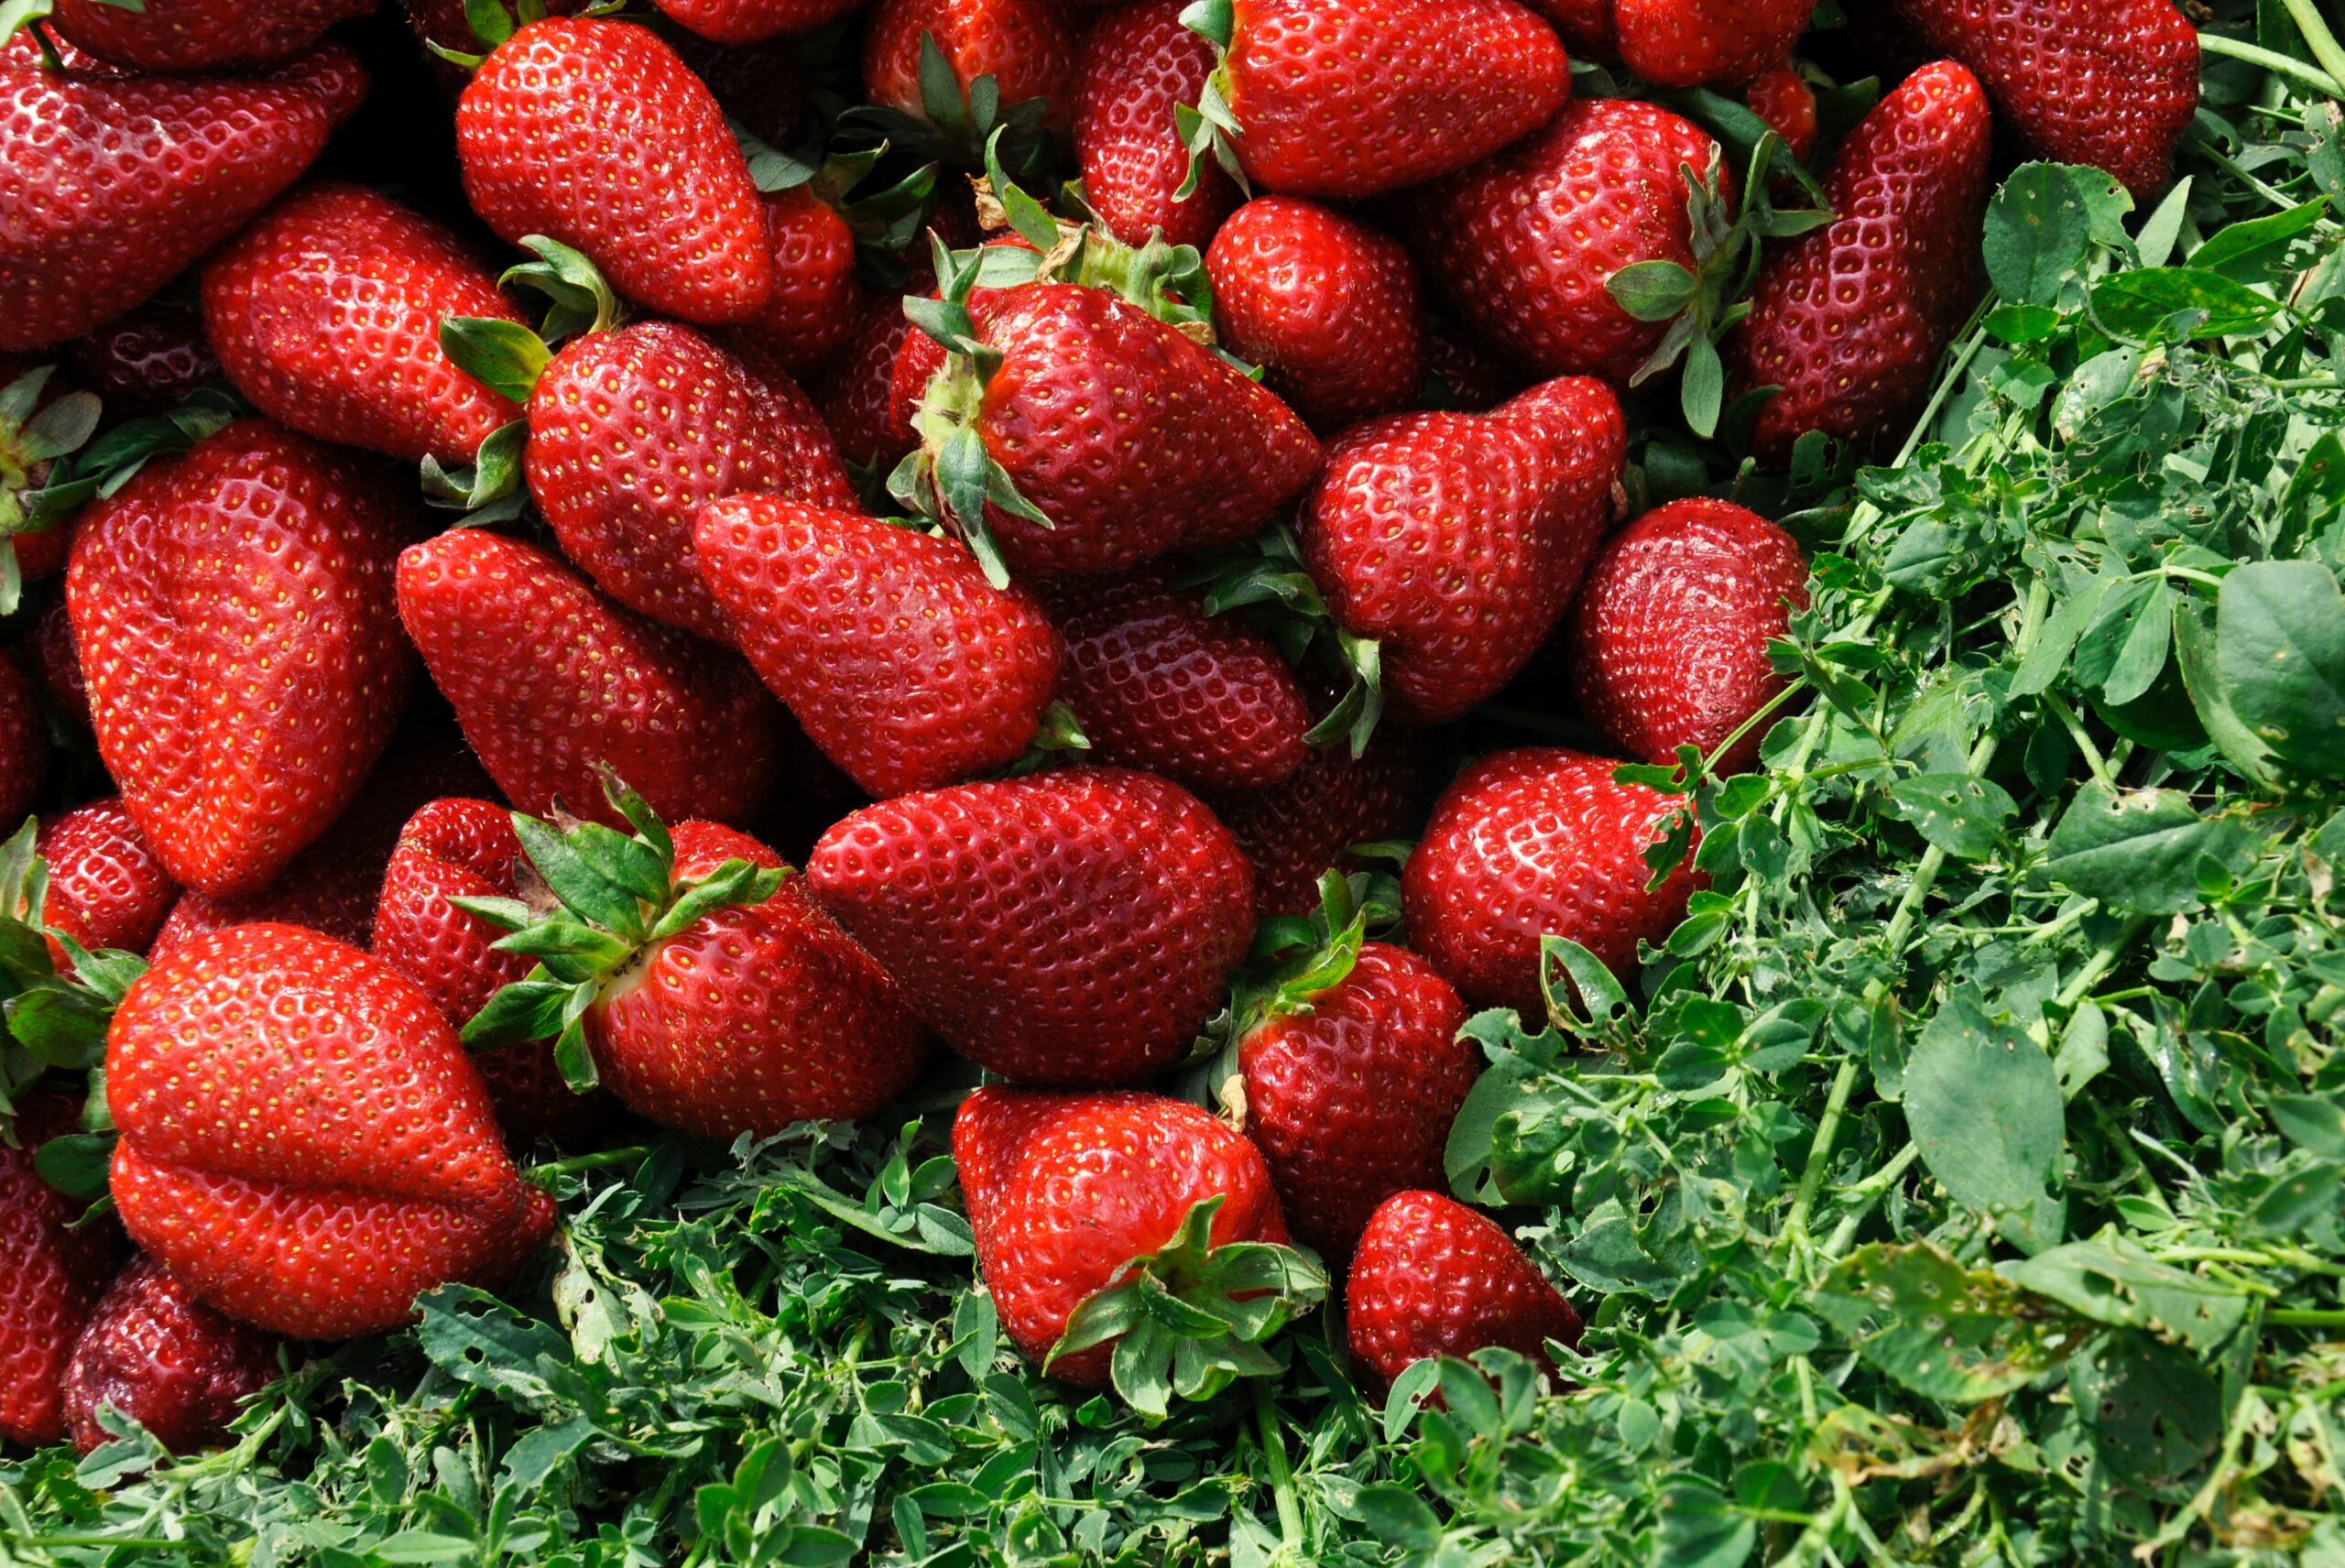 red strawberries on grass field